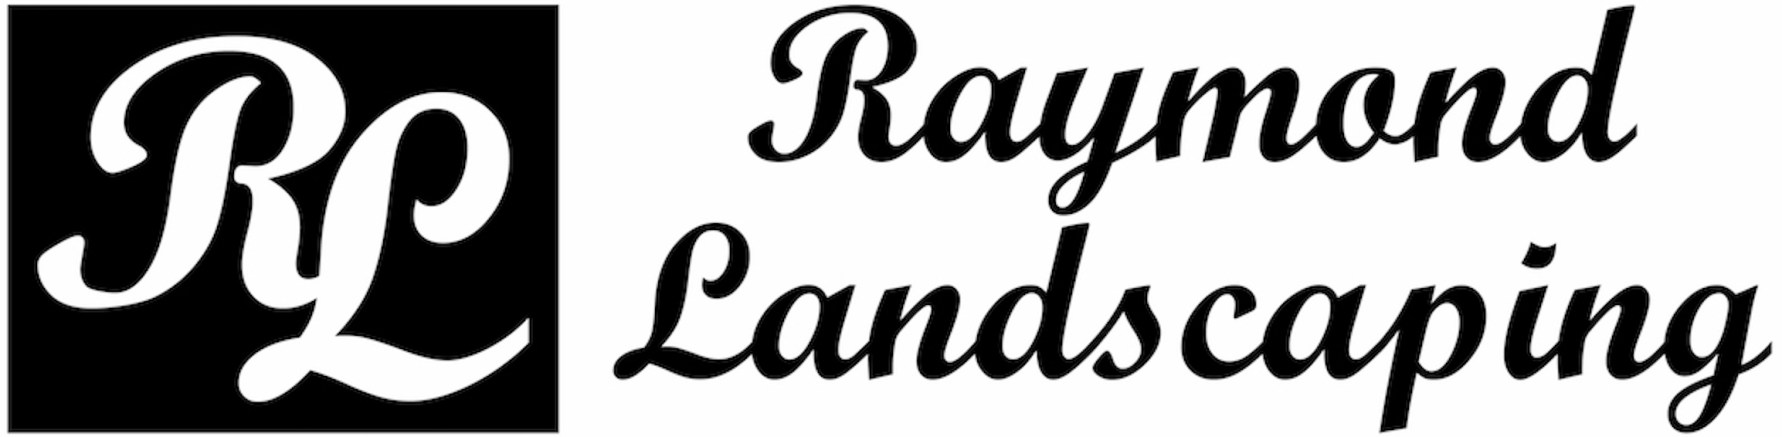 Raymond Landscaping logo.